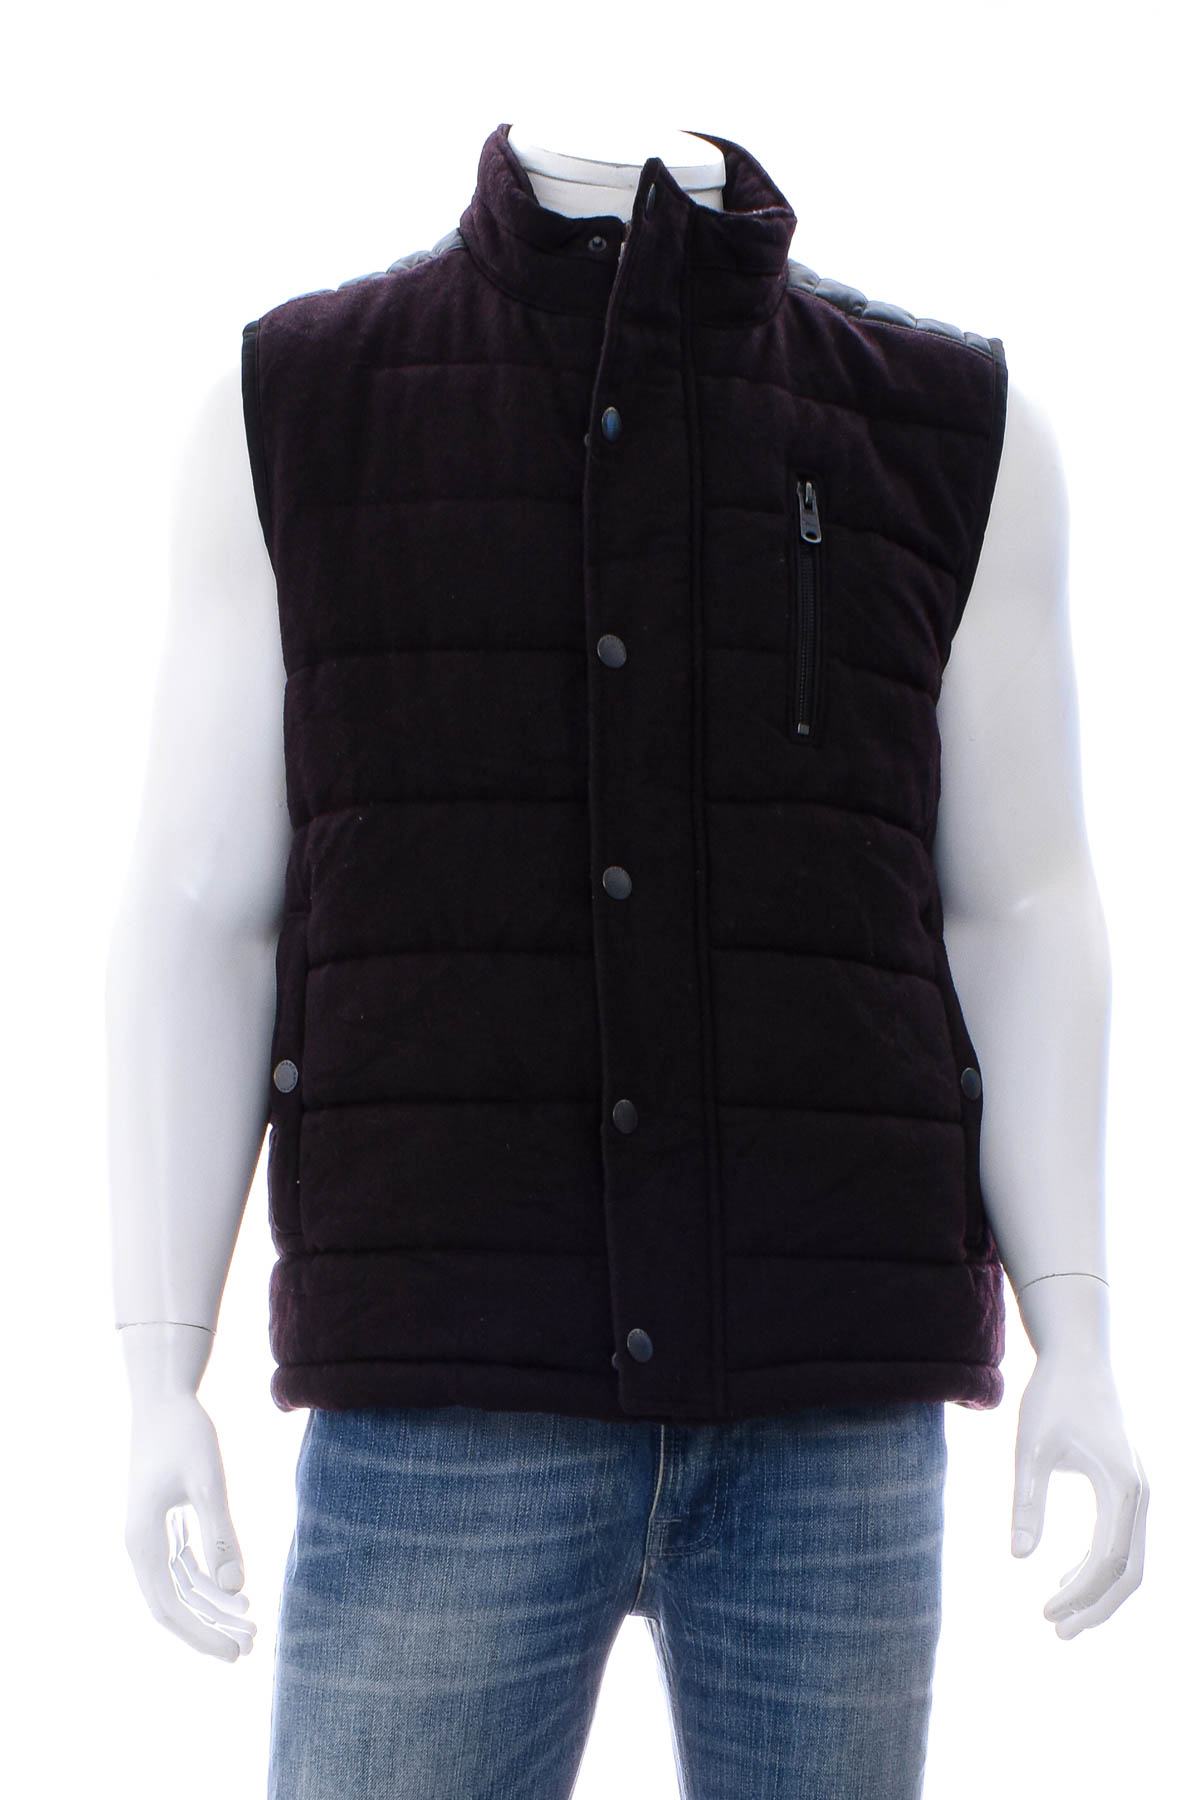 Men's vest - MARC ANTHONY - 0